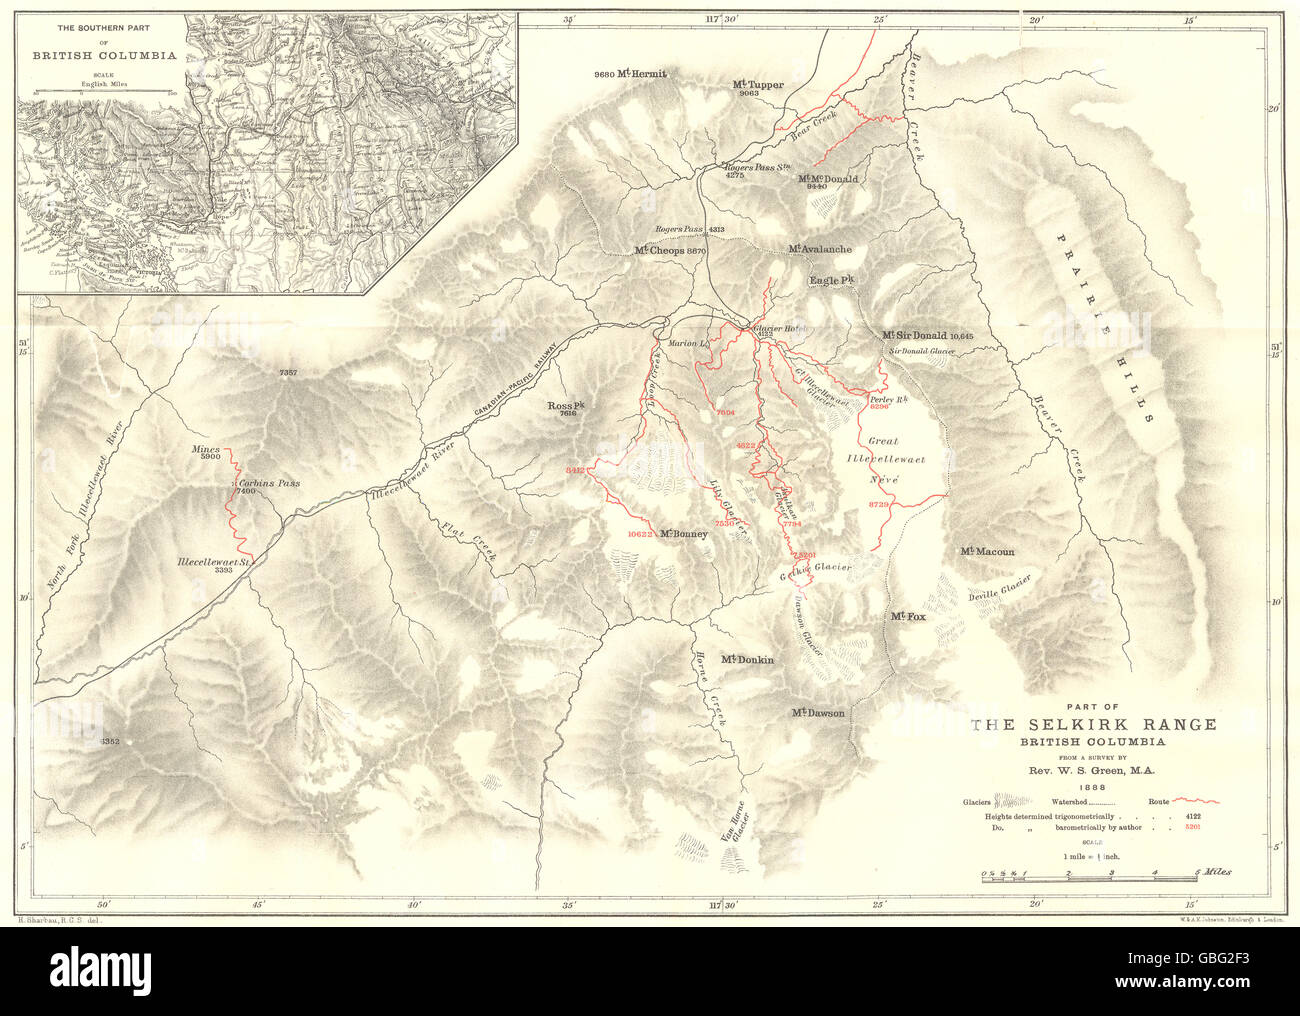 BRITISH COLUMBIA: Part of the Selkirk Range. Rev. Green survey. RGS, 1889 map Stock Photo